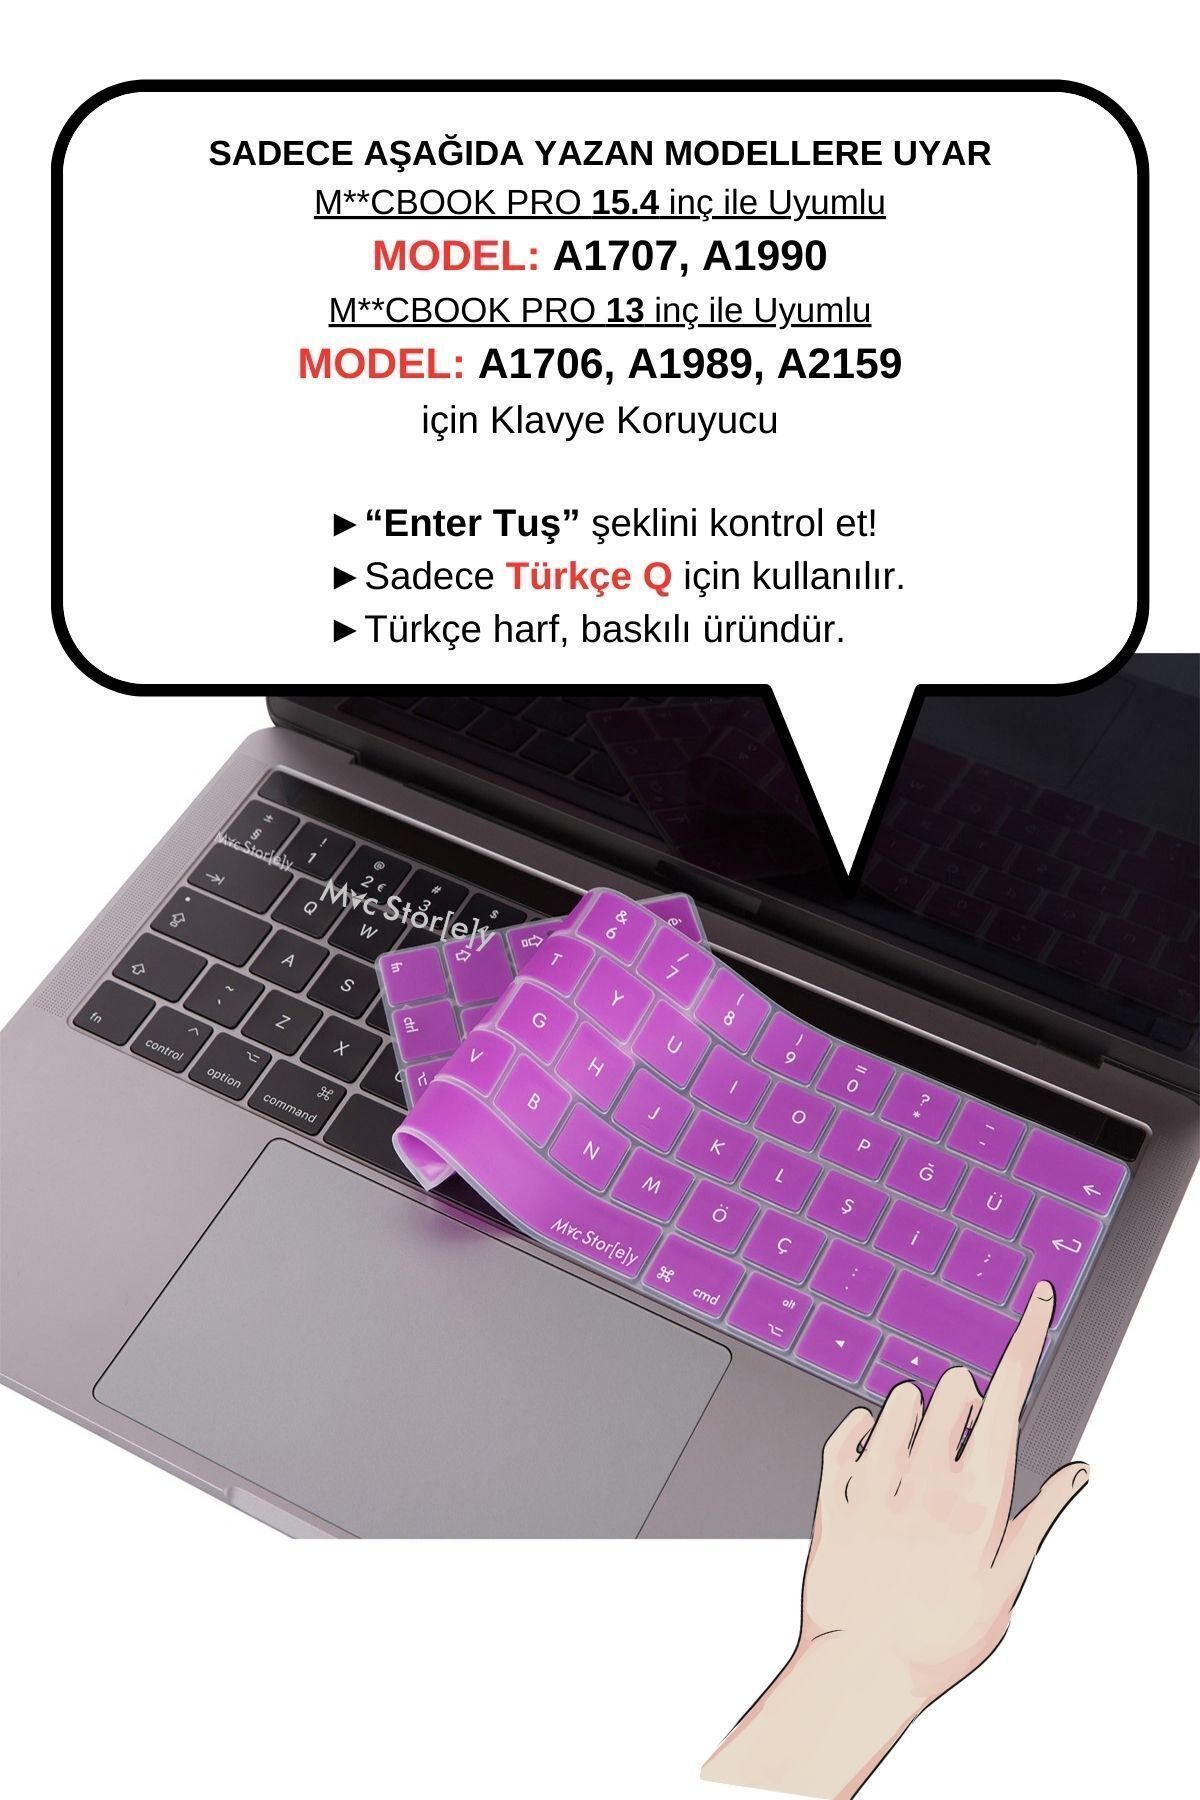 Mcstorey Macbook Pro Klavye Koruyucu 13 Inç (TÜRKÇE Q) A1706 A1989 A2159 A1707 A1990 Ile Uyumlu